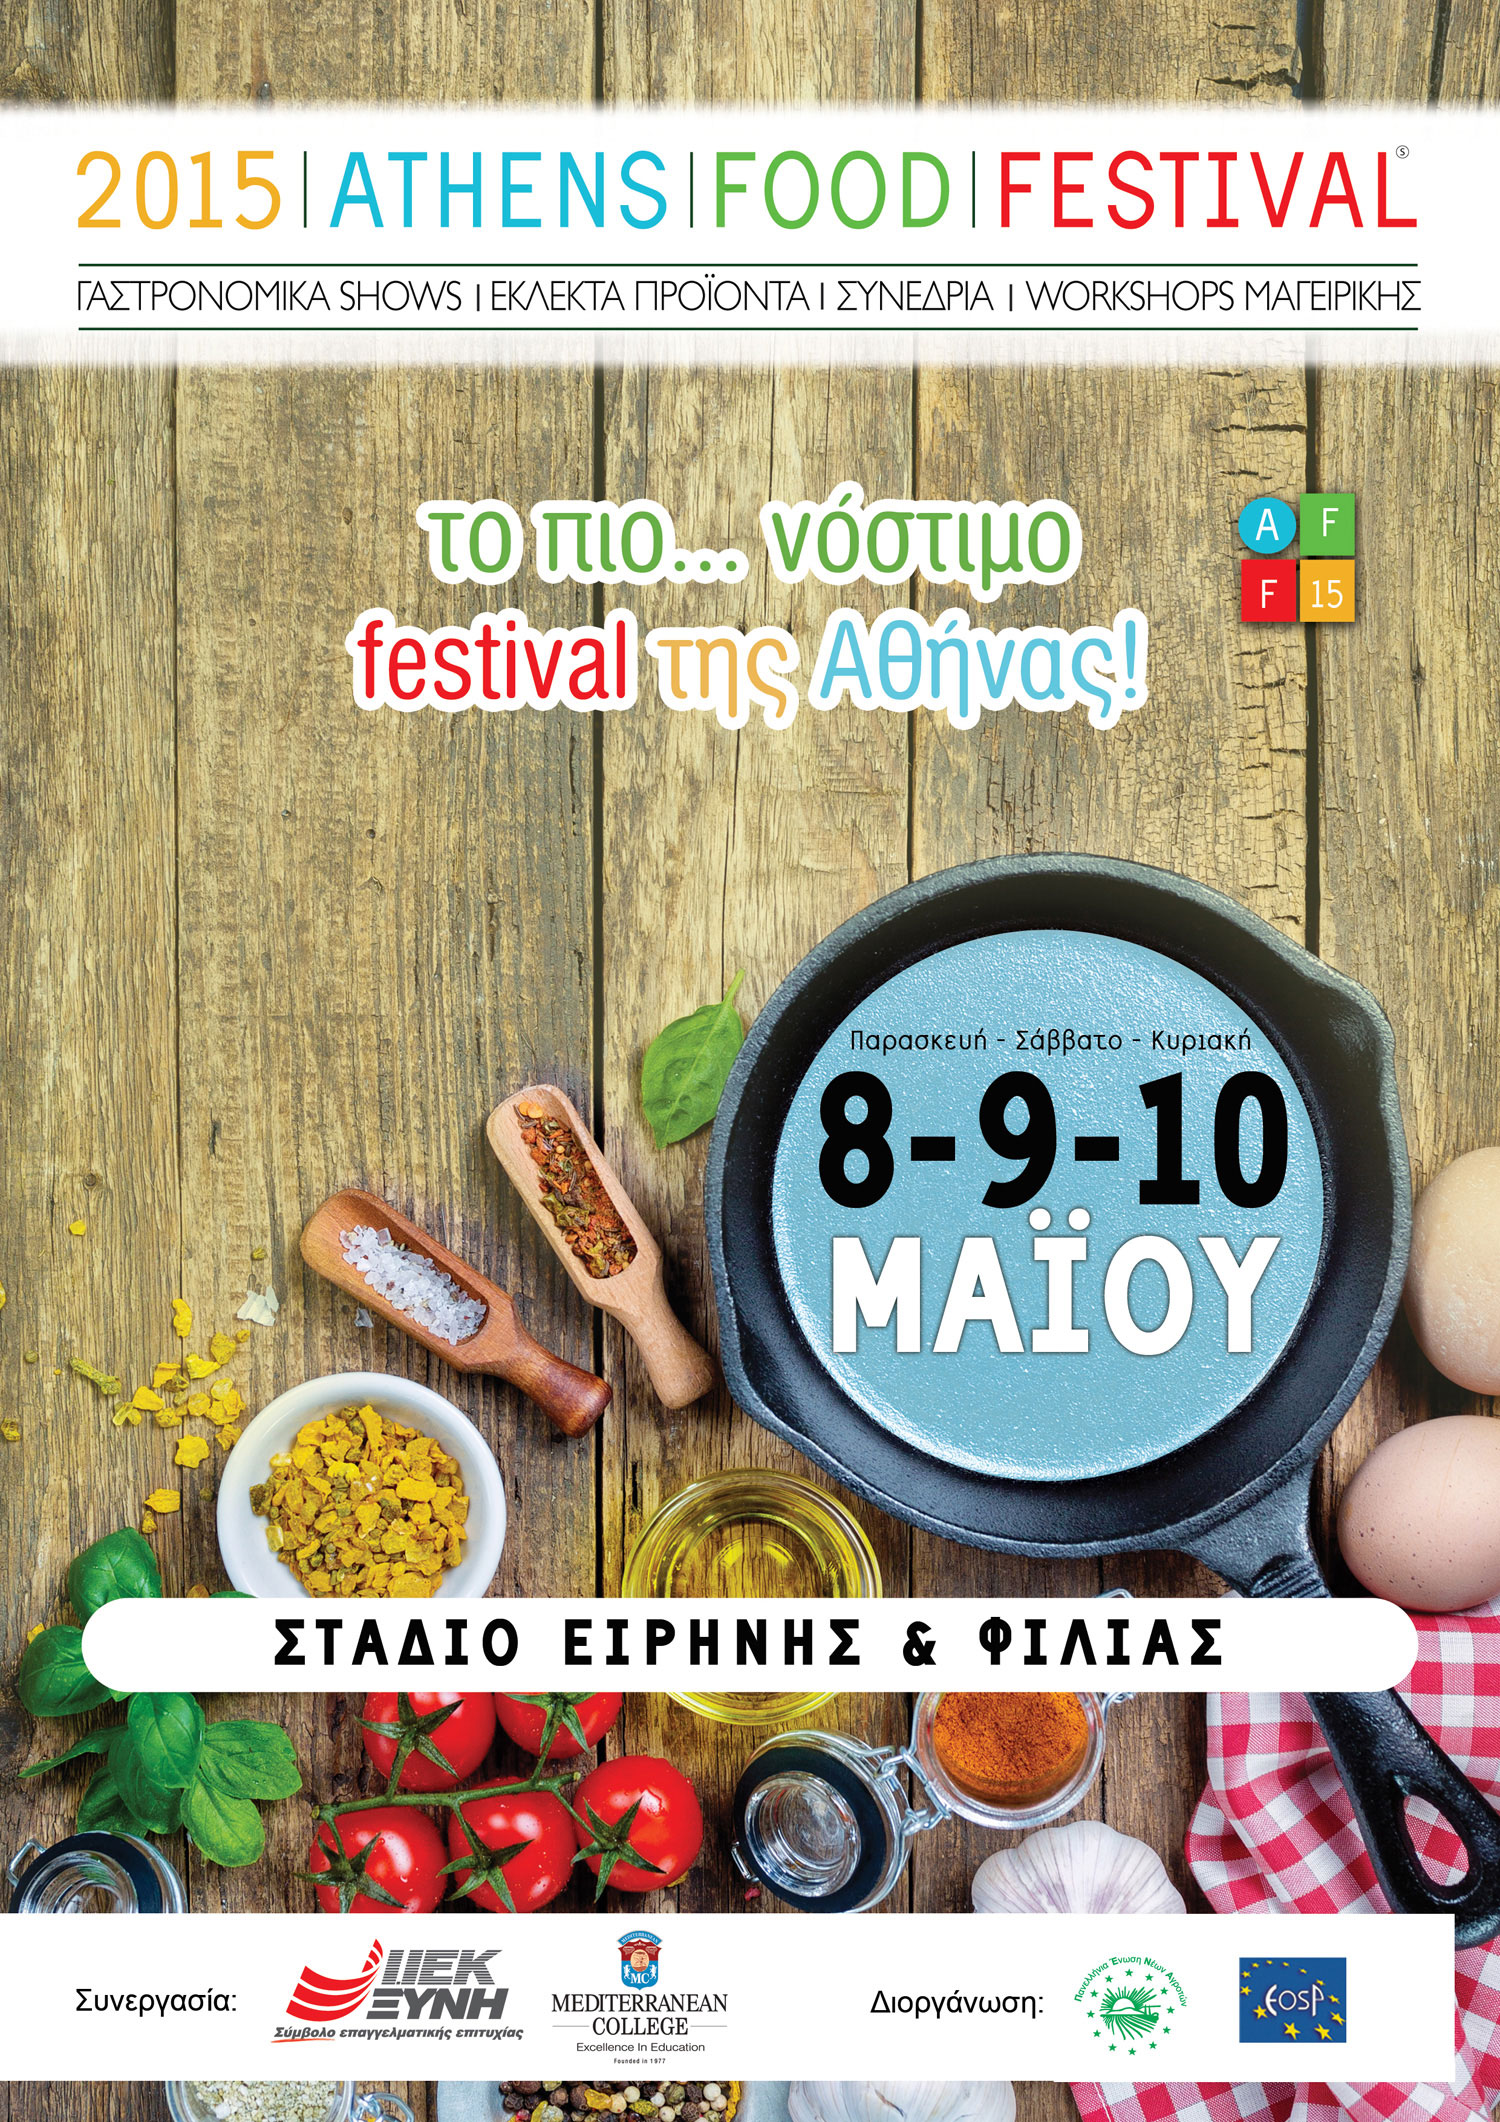 athens-food-festival-flyer.jpg